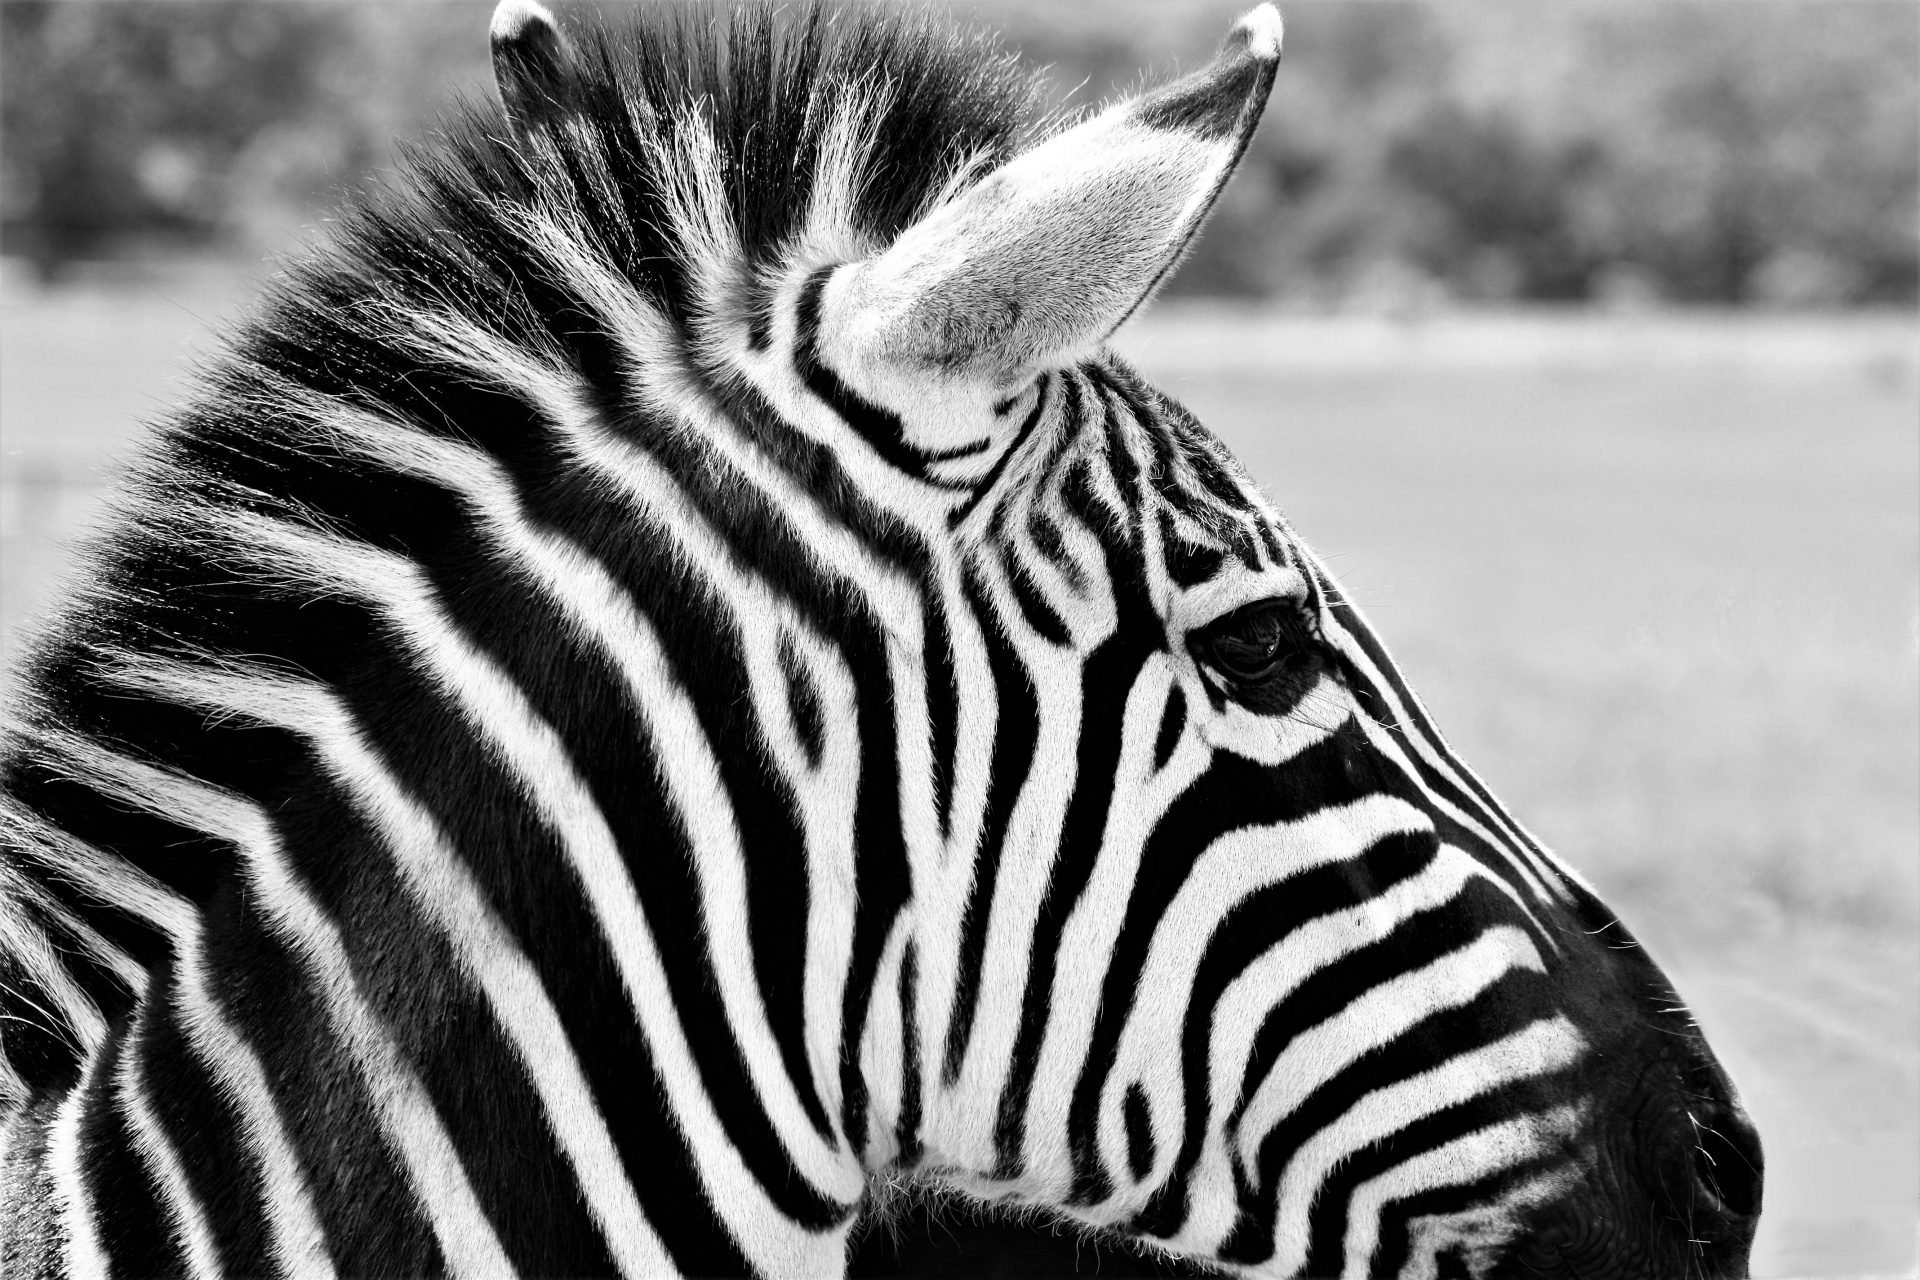 Gamta,  Laukinė Gamta,  Gyvūnai,  Arkliai,  Zebra,  Lygumos & Nbsp,  Zebra,  Iš Arti,  Portretas,  Profilis